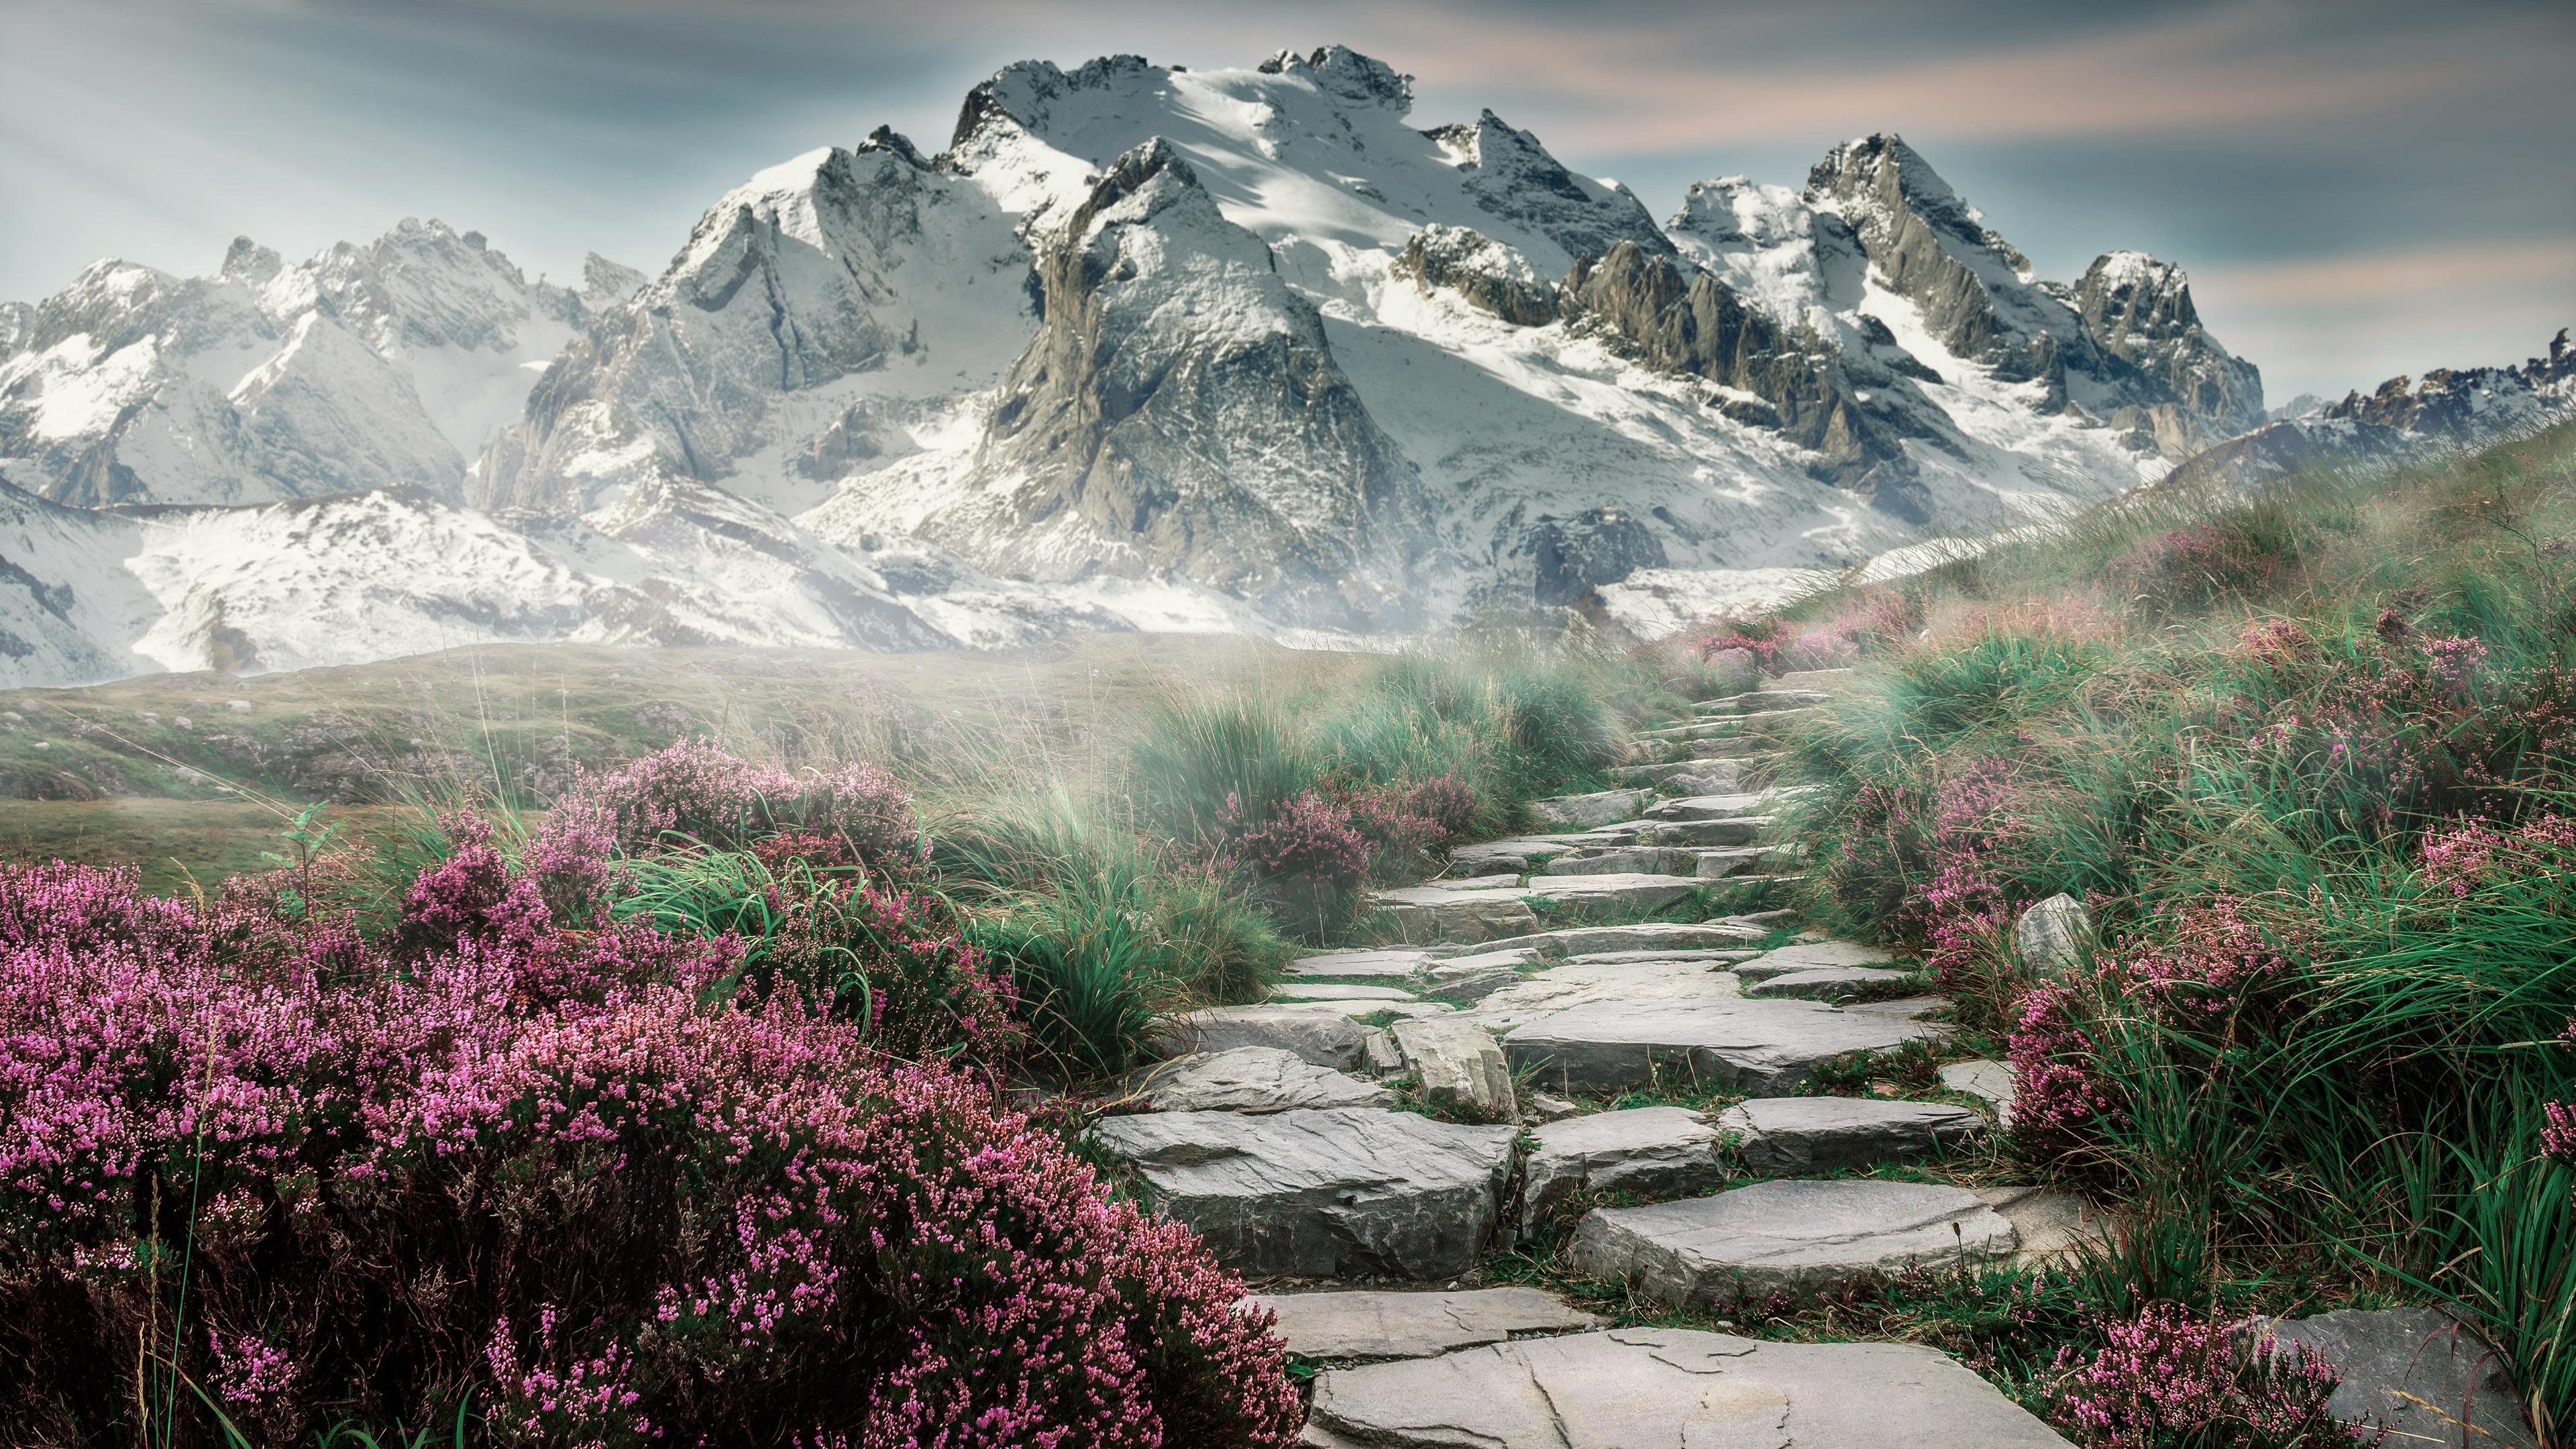 Mountain Landscape 4K Wallpaper x 2160 pxK